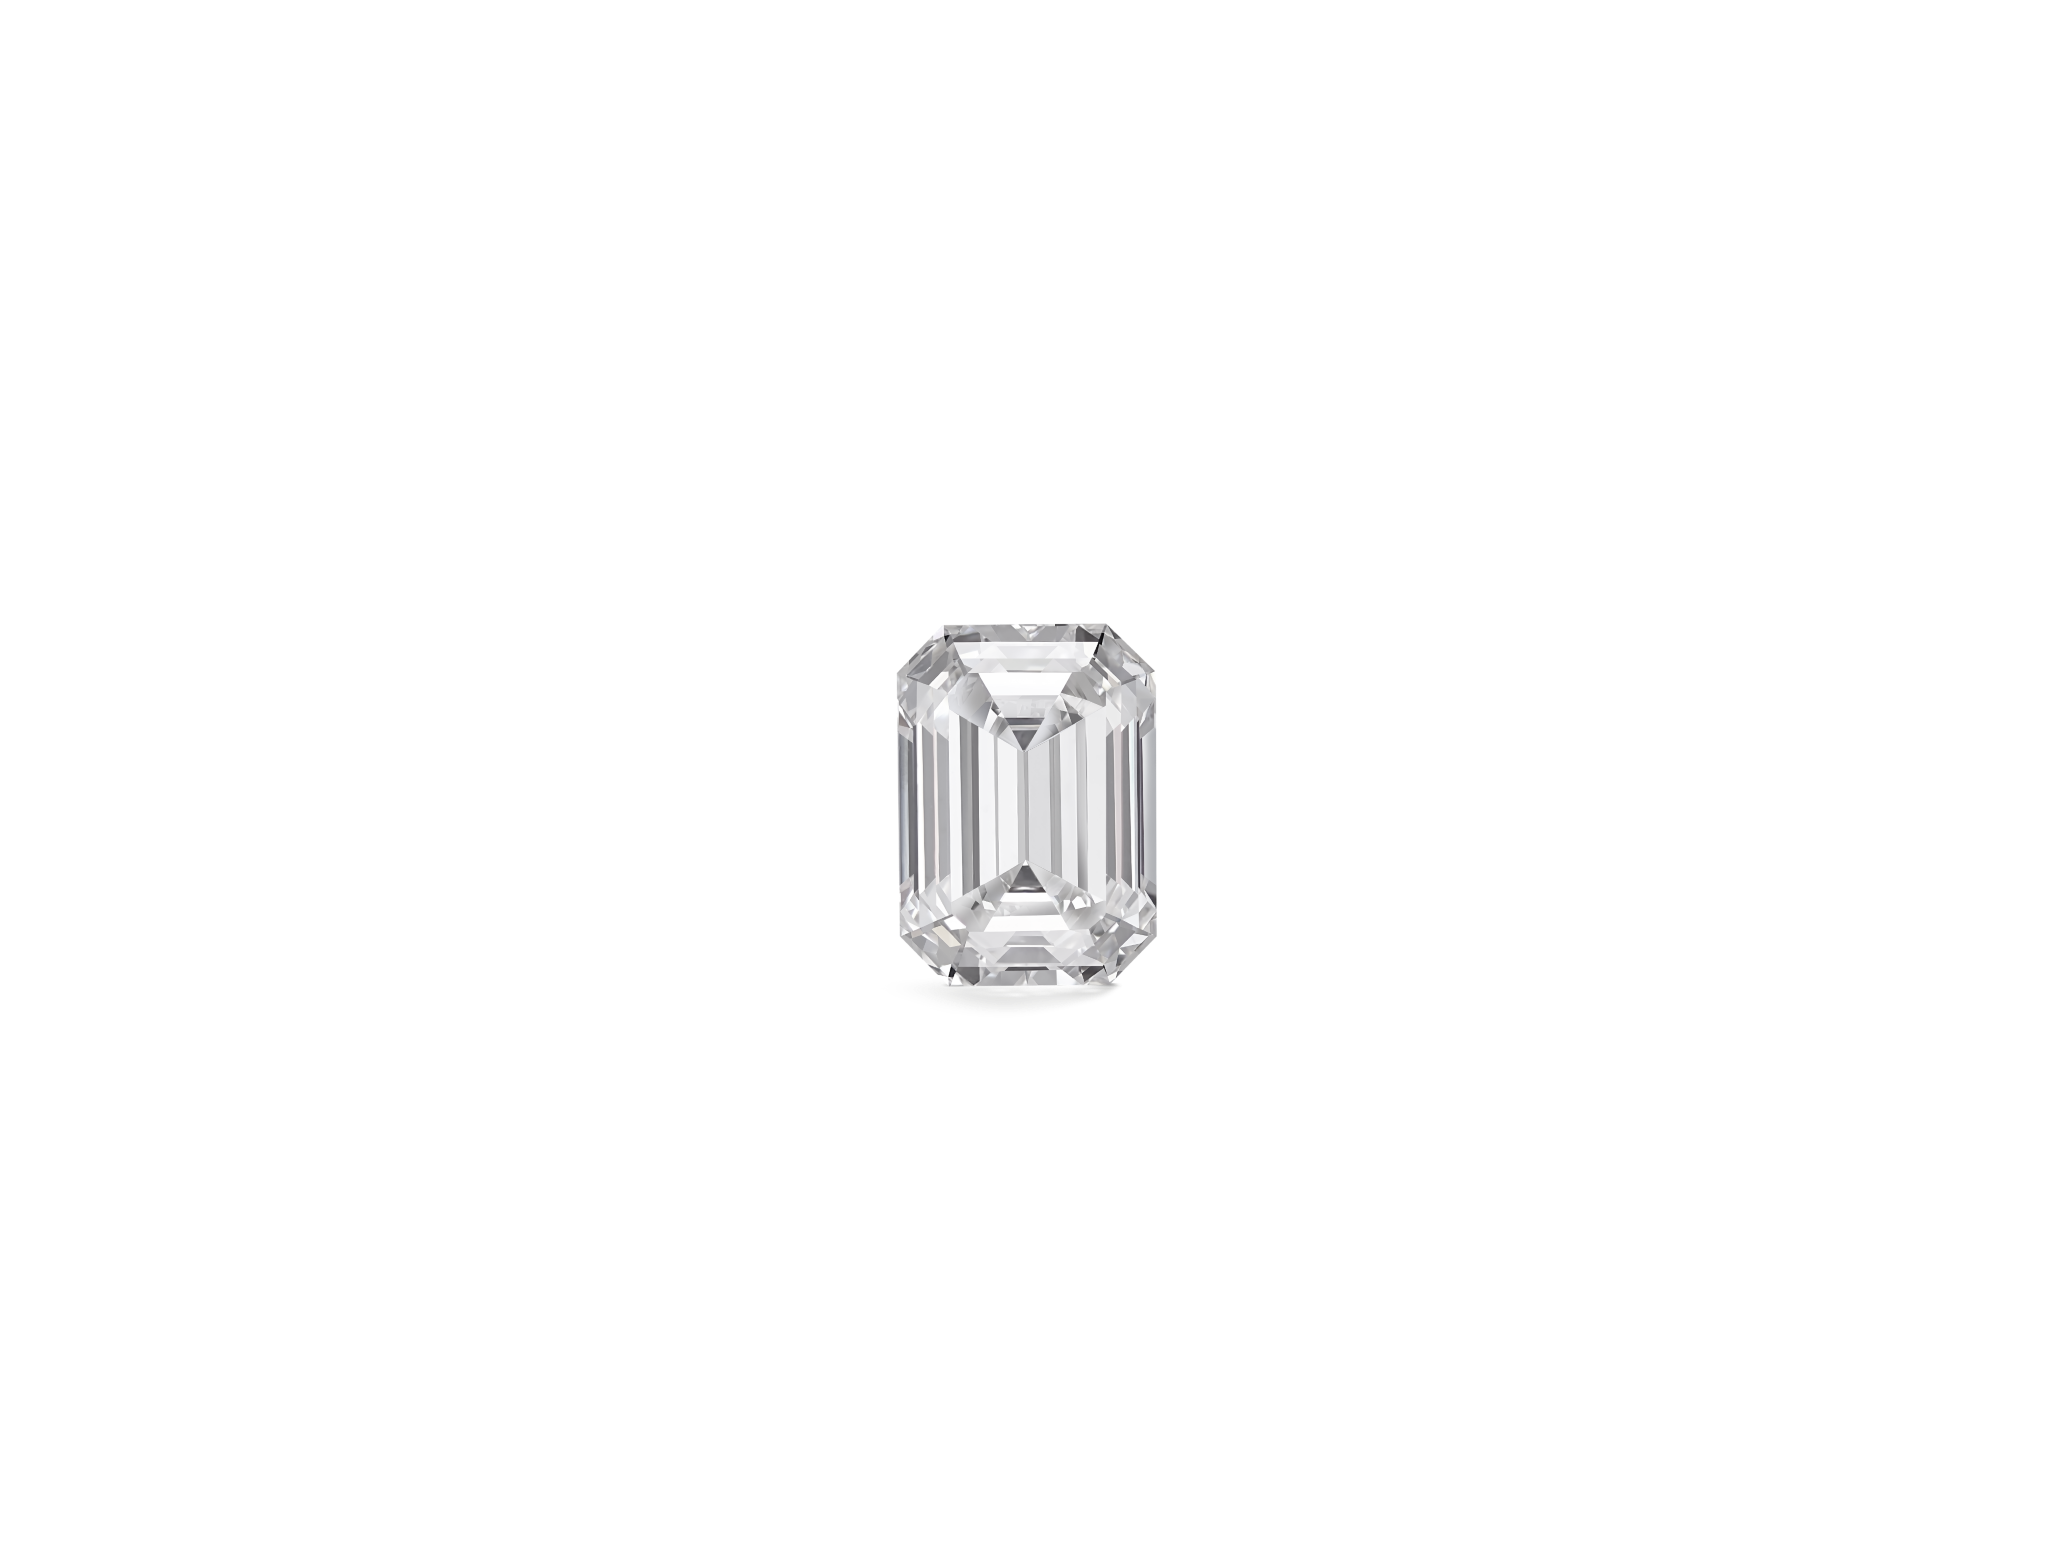 Birds eye view of 1 carat white emerald cut diamond